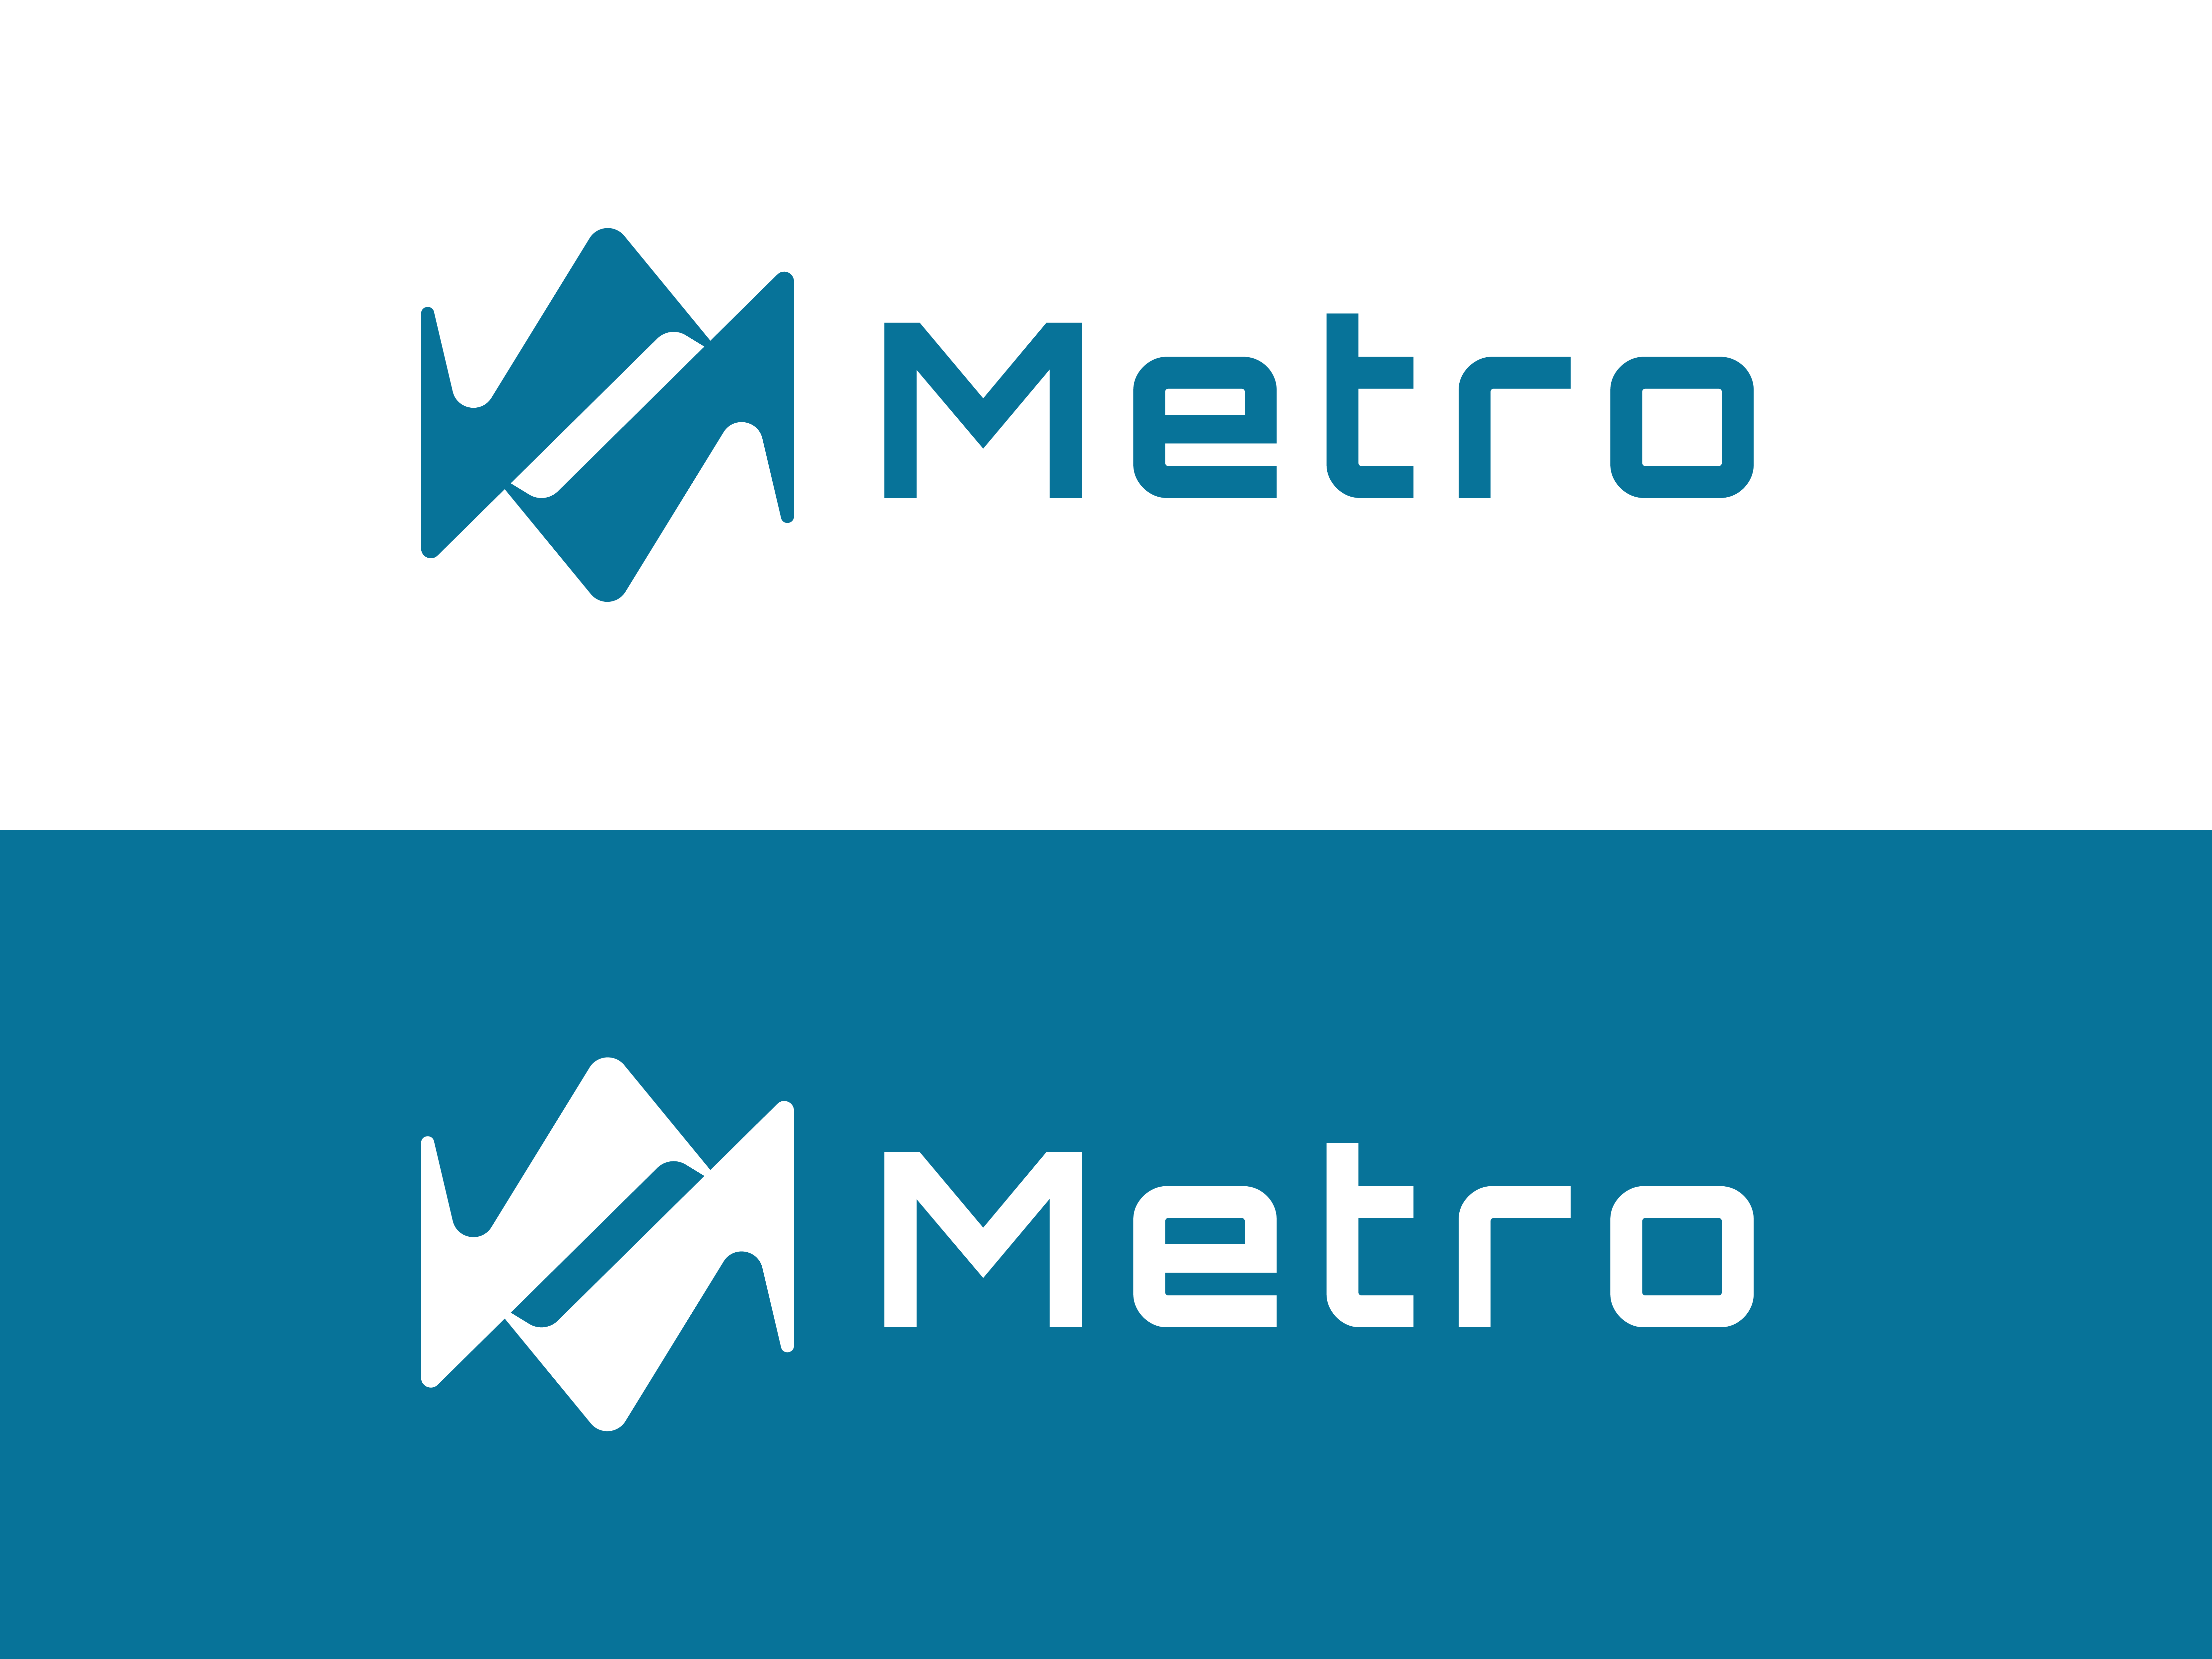 Metro city modern logo designs simple Royalty Free Vector